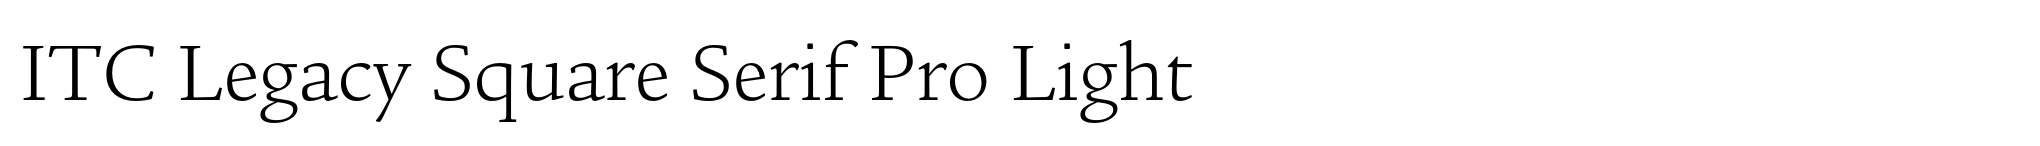 ITC Legacy Square Serif Pro Light image